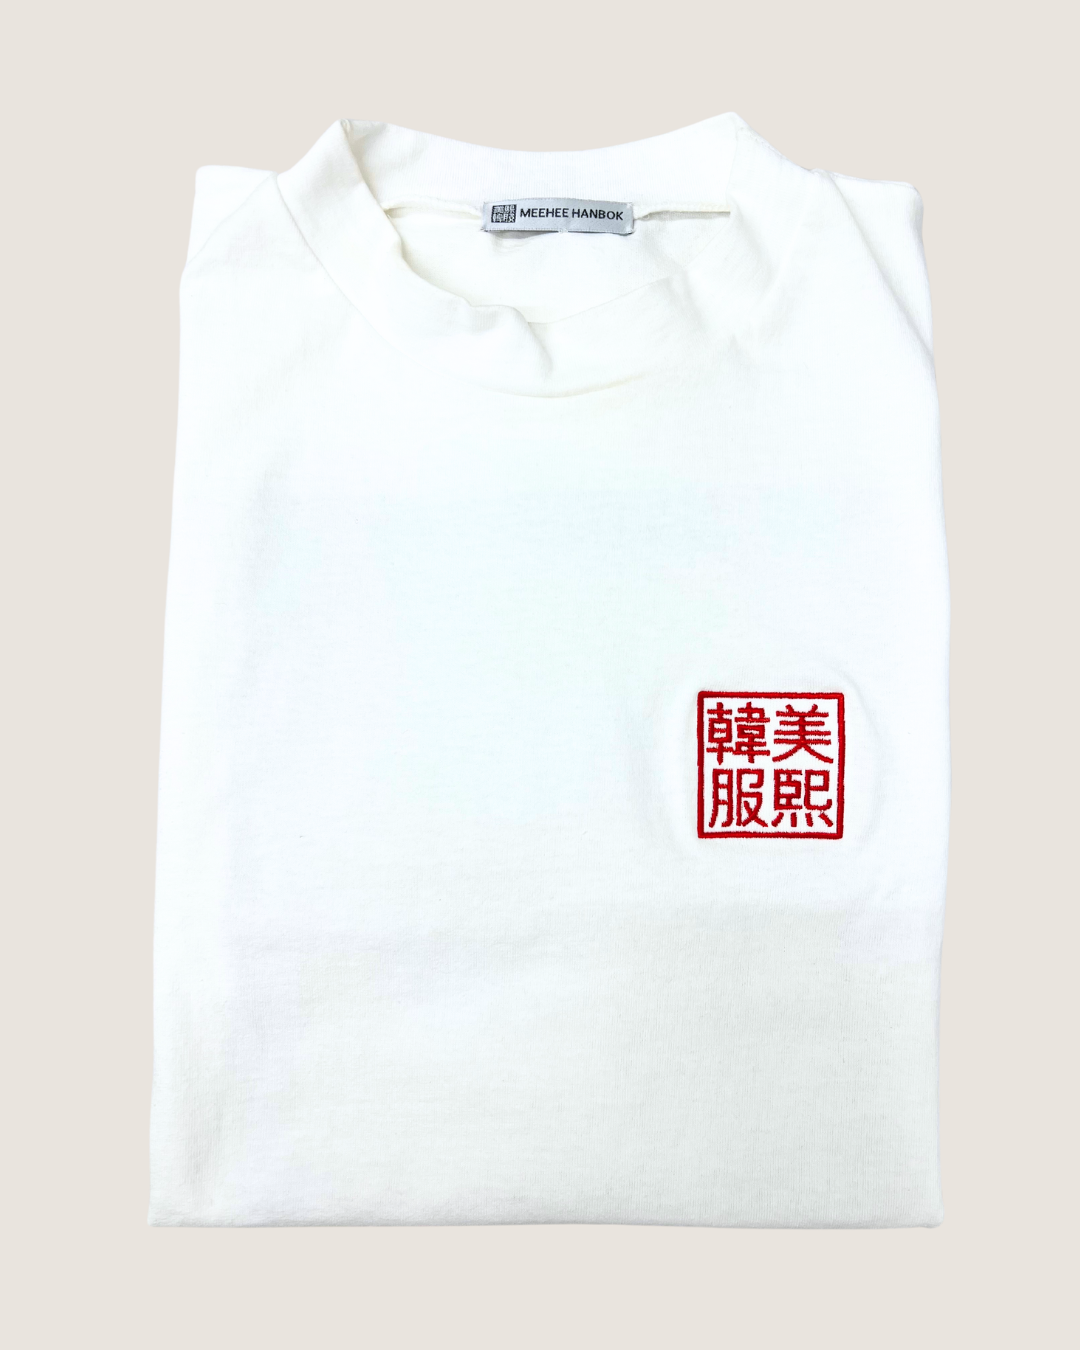 Crane T-shirt (black or white)